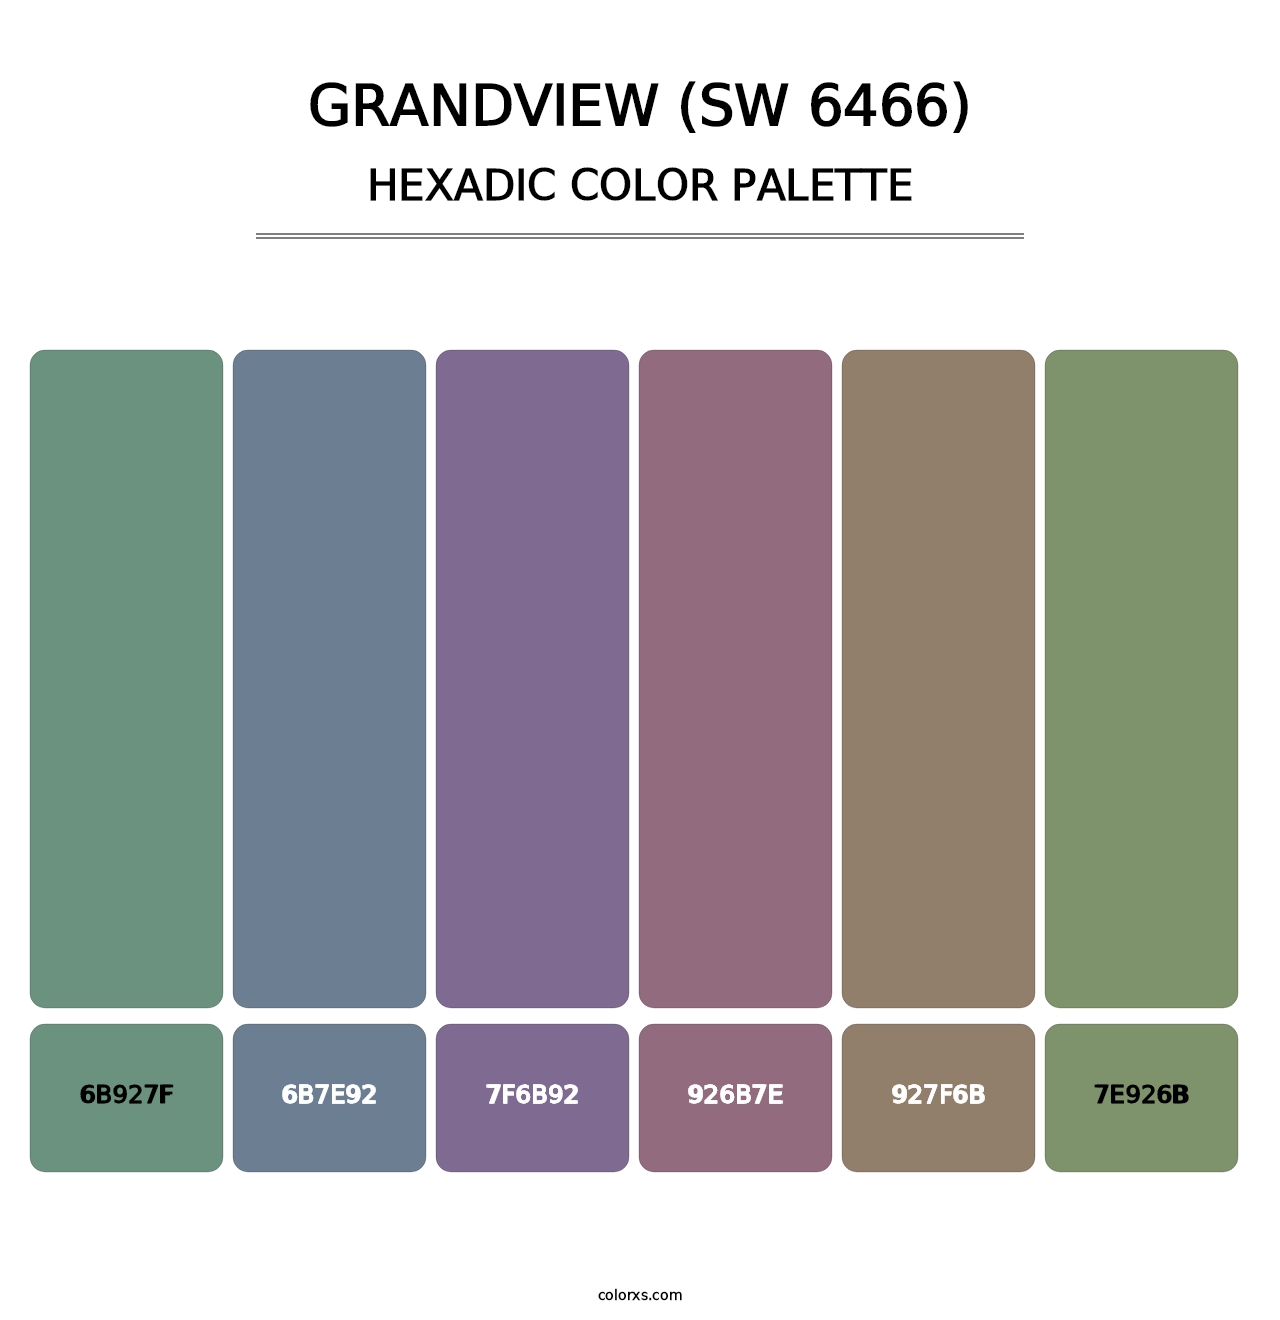 Grandview (SW 6466) - Hexadic Color Palette